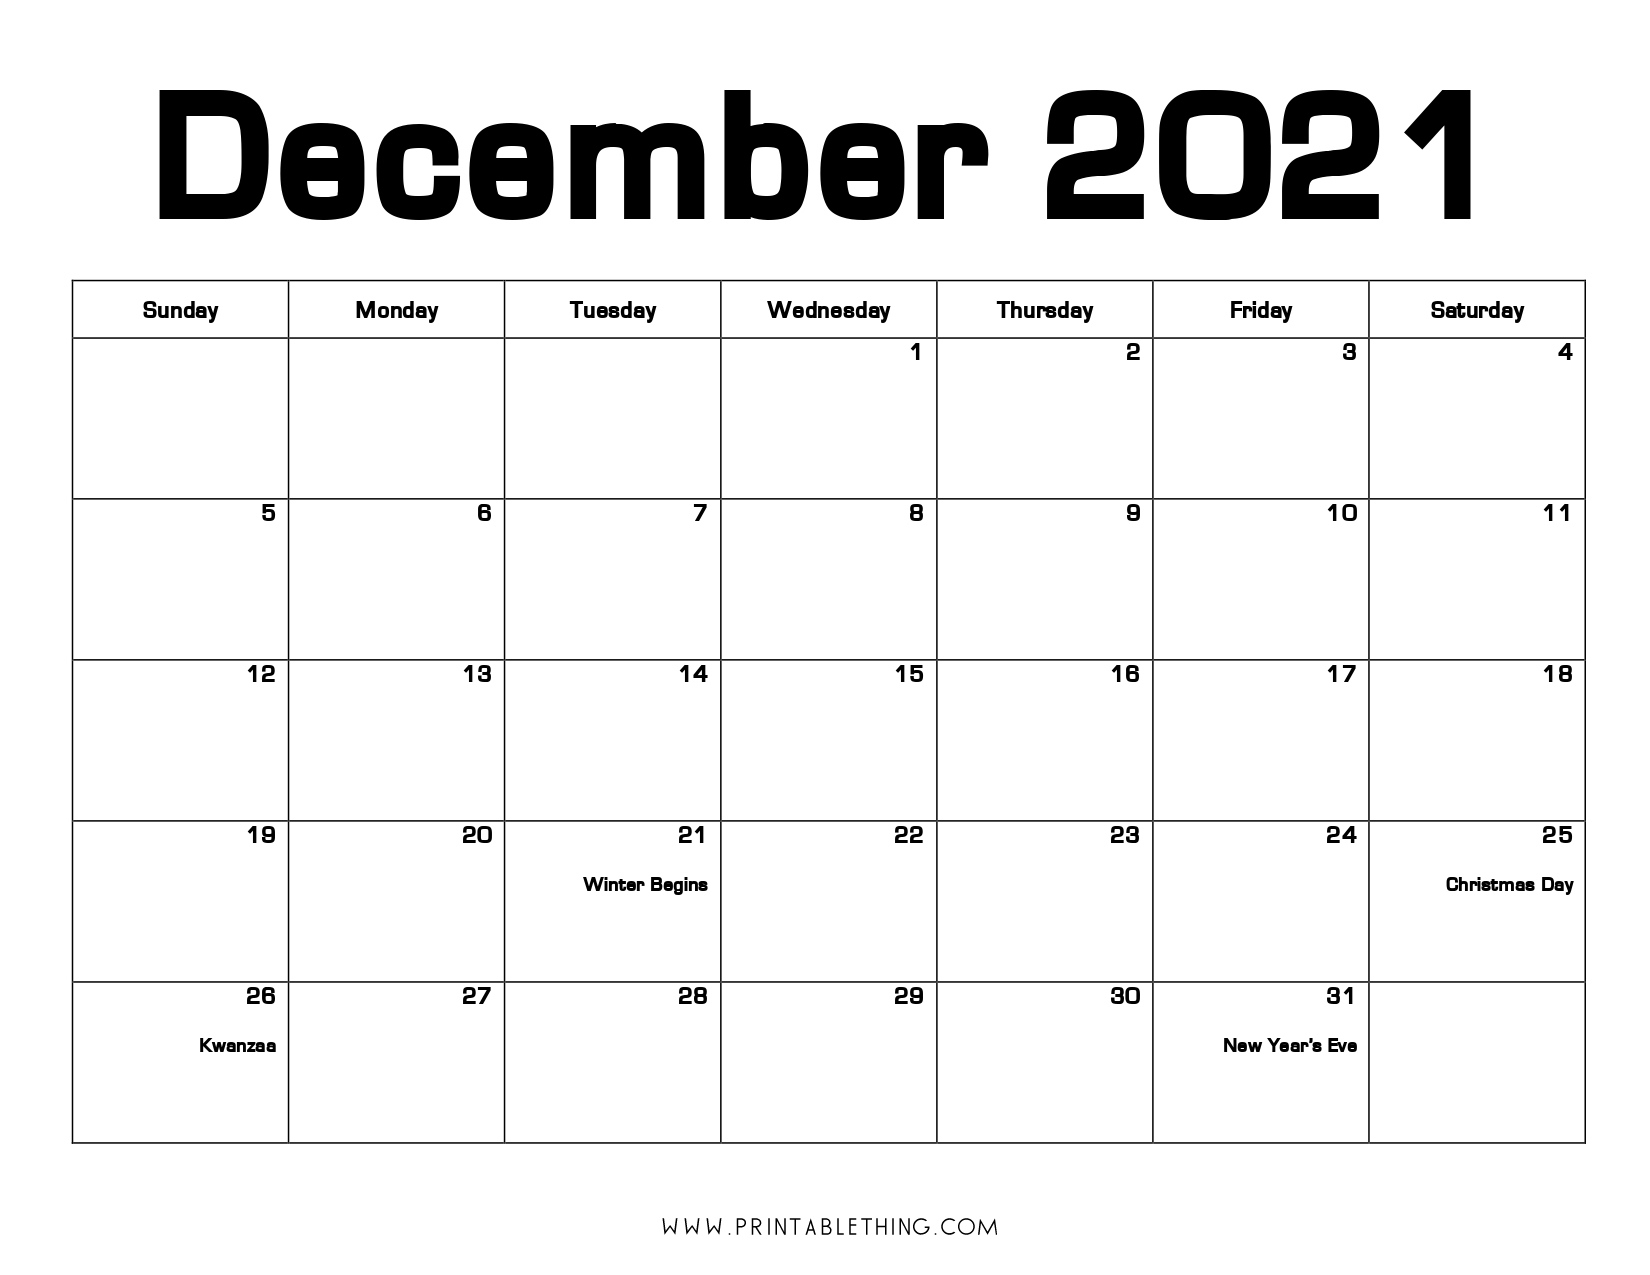 December 2021 Calendar Pdf, December 2021 Calendar Image Print December 2021 Calendar Quiz